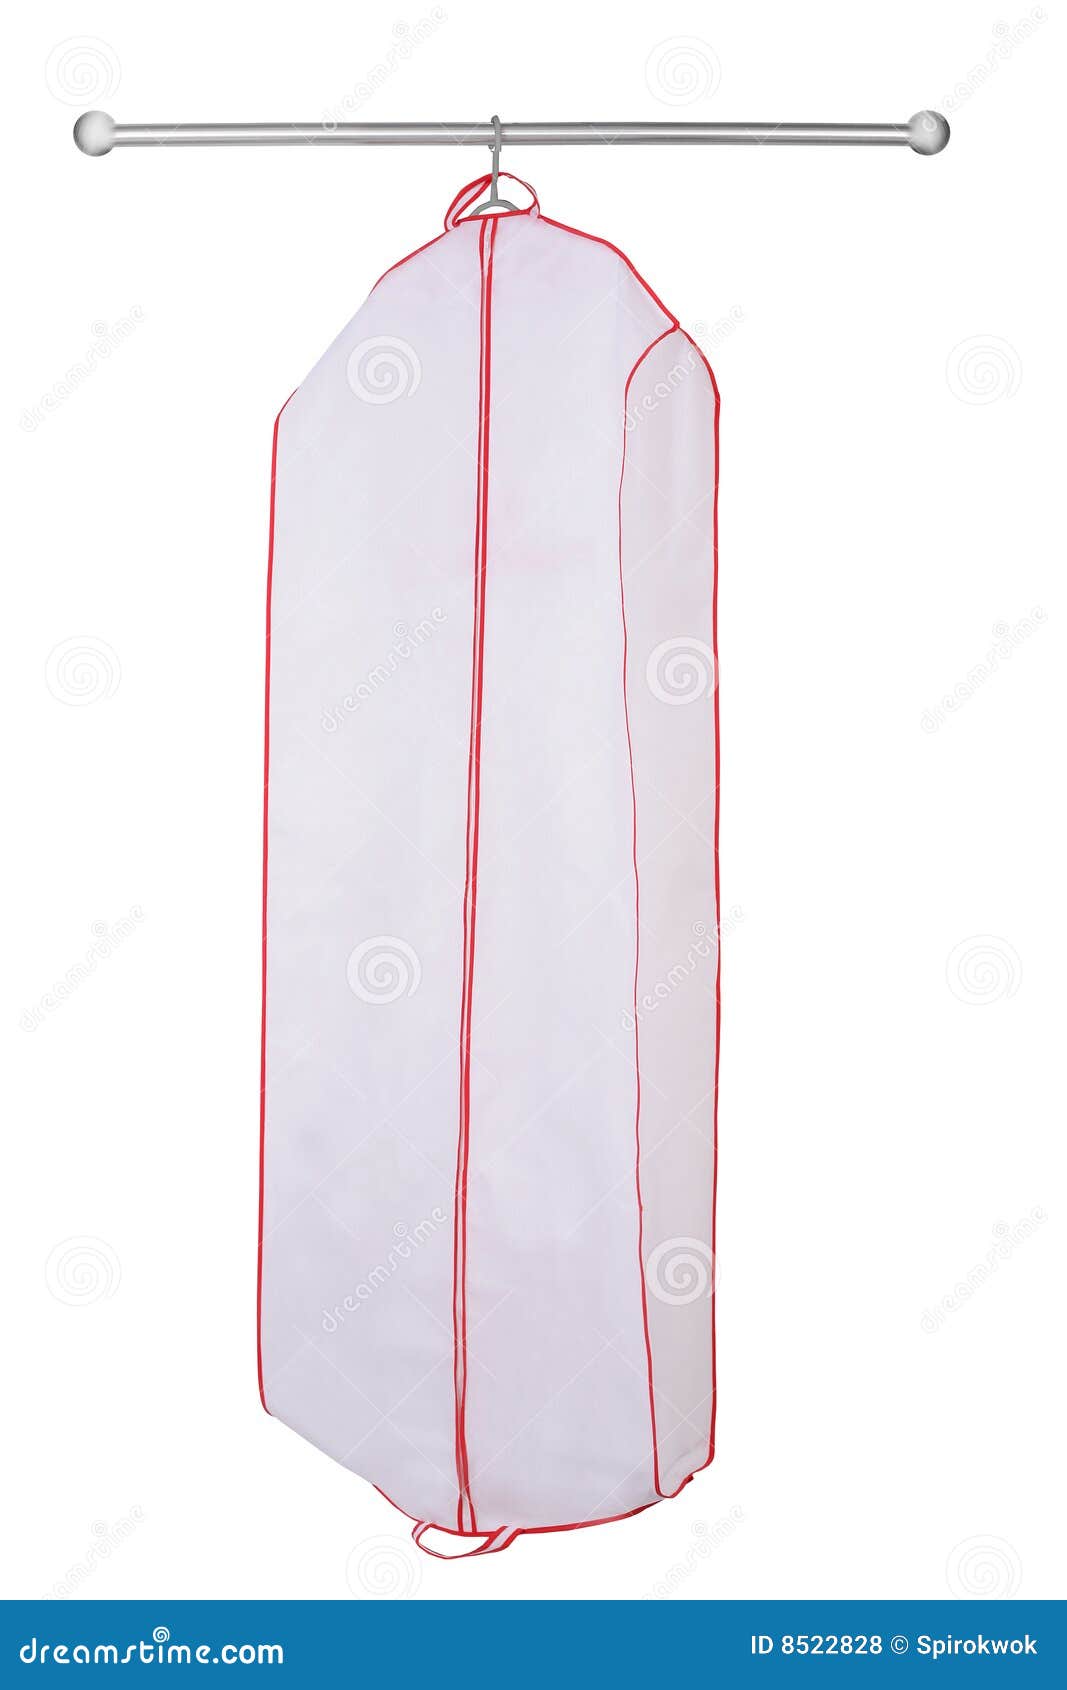 hanging garment bag